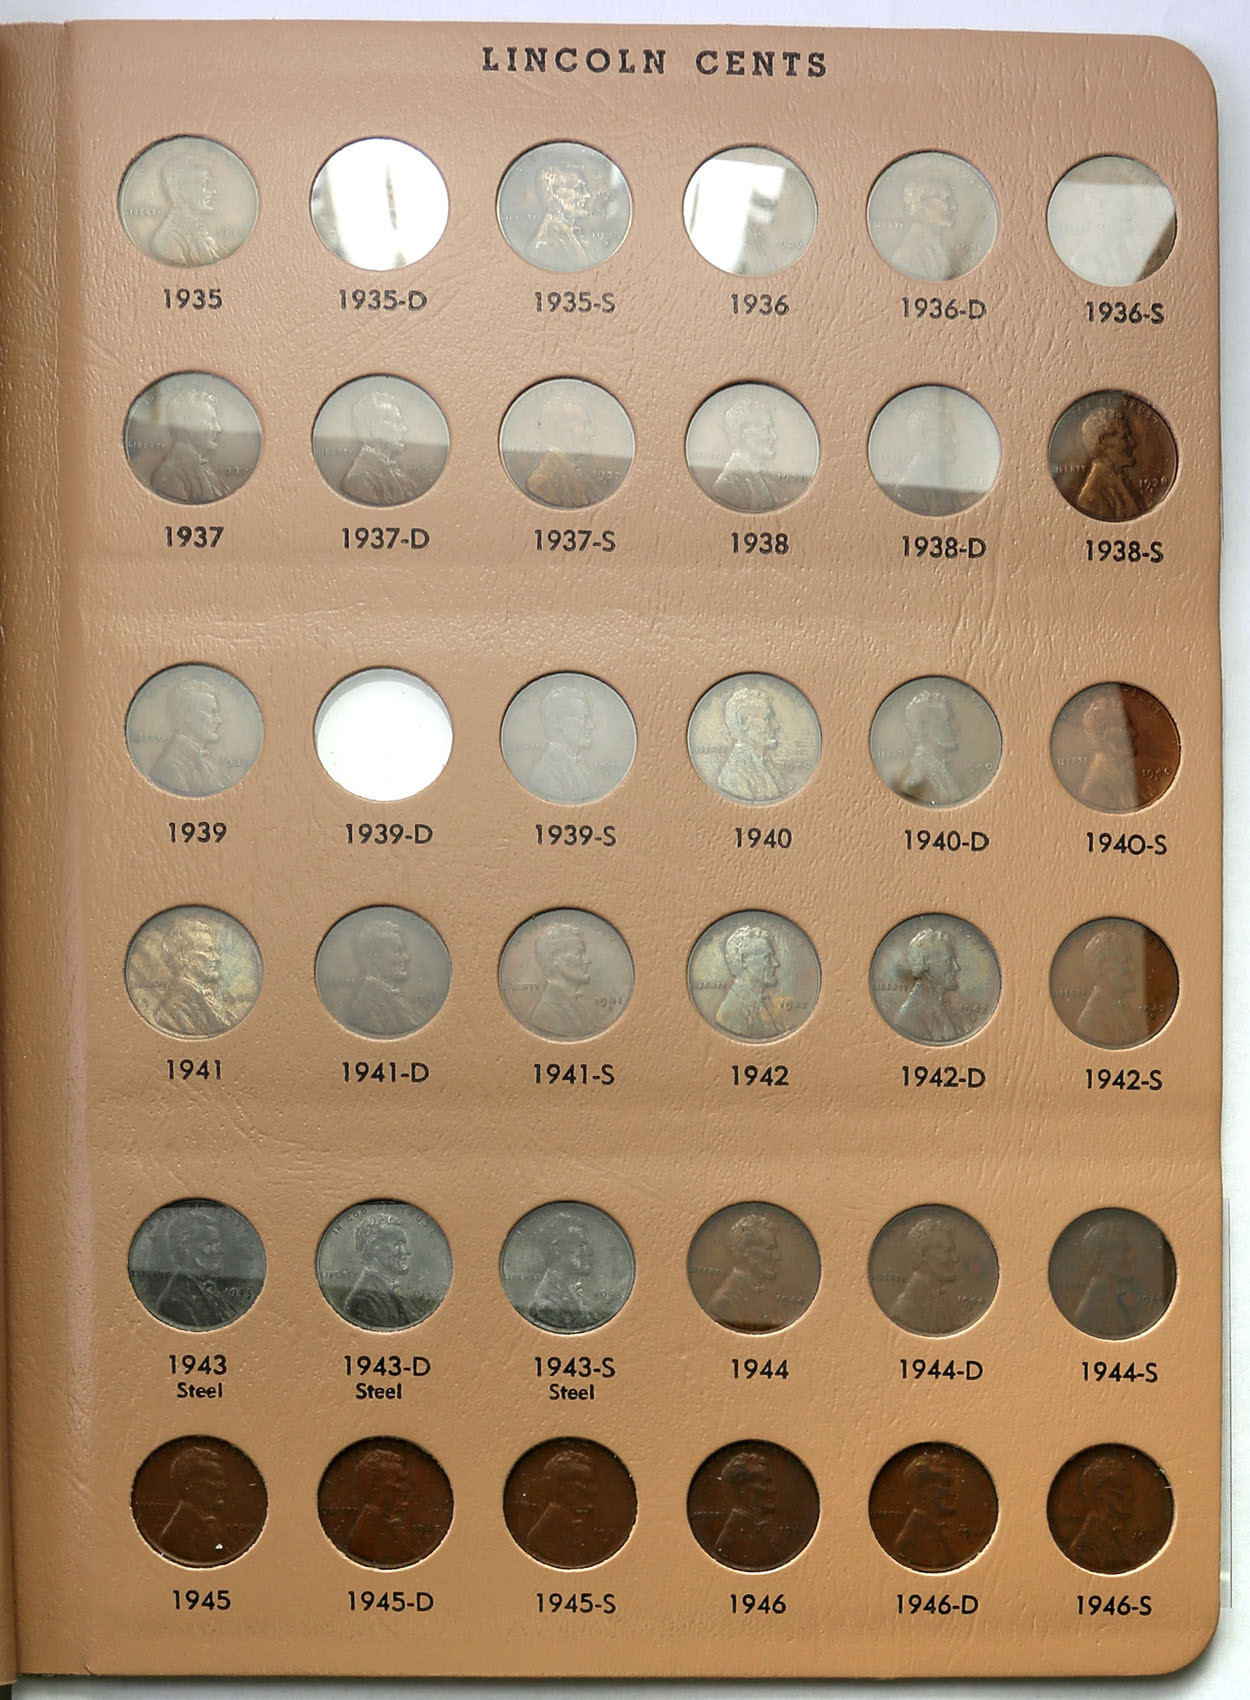 USA. Klaser z monetami 1 cent 1909-2012, Lincoln - zestaw 226 sztuk